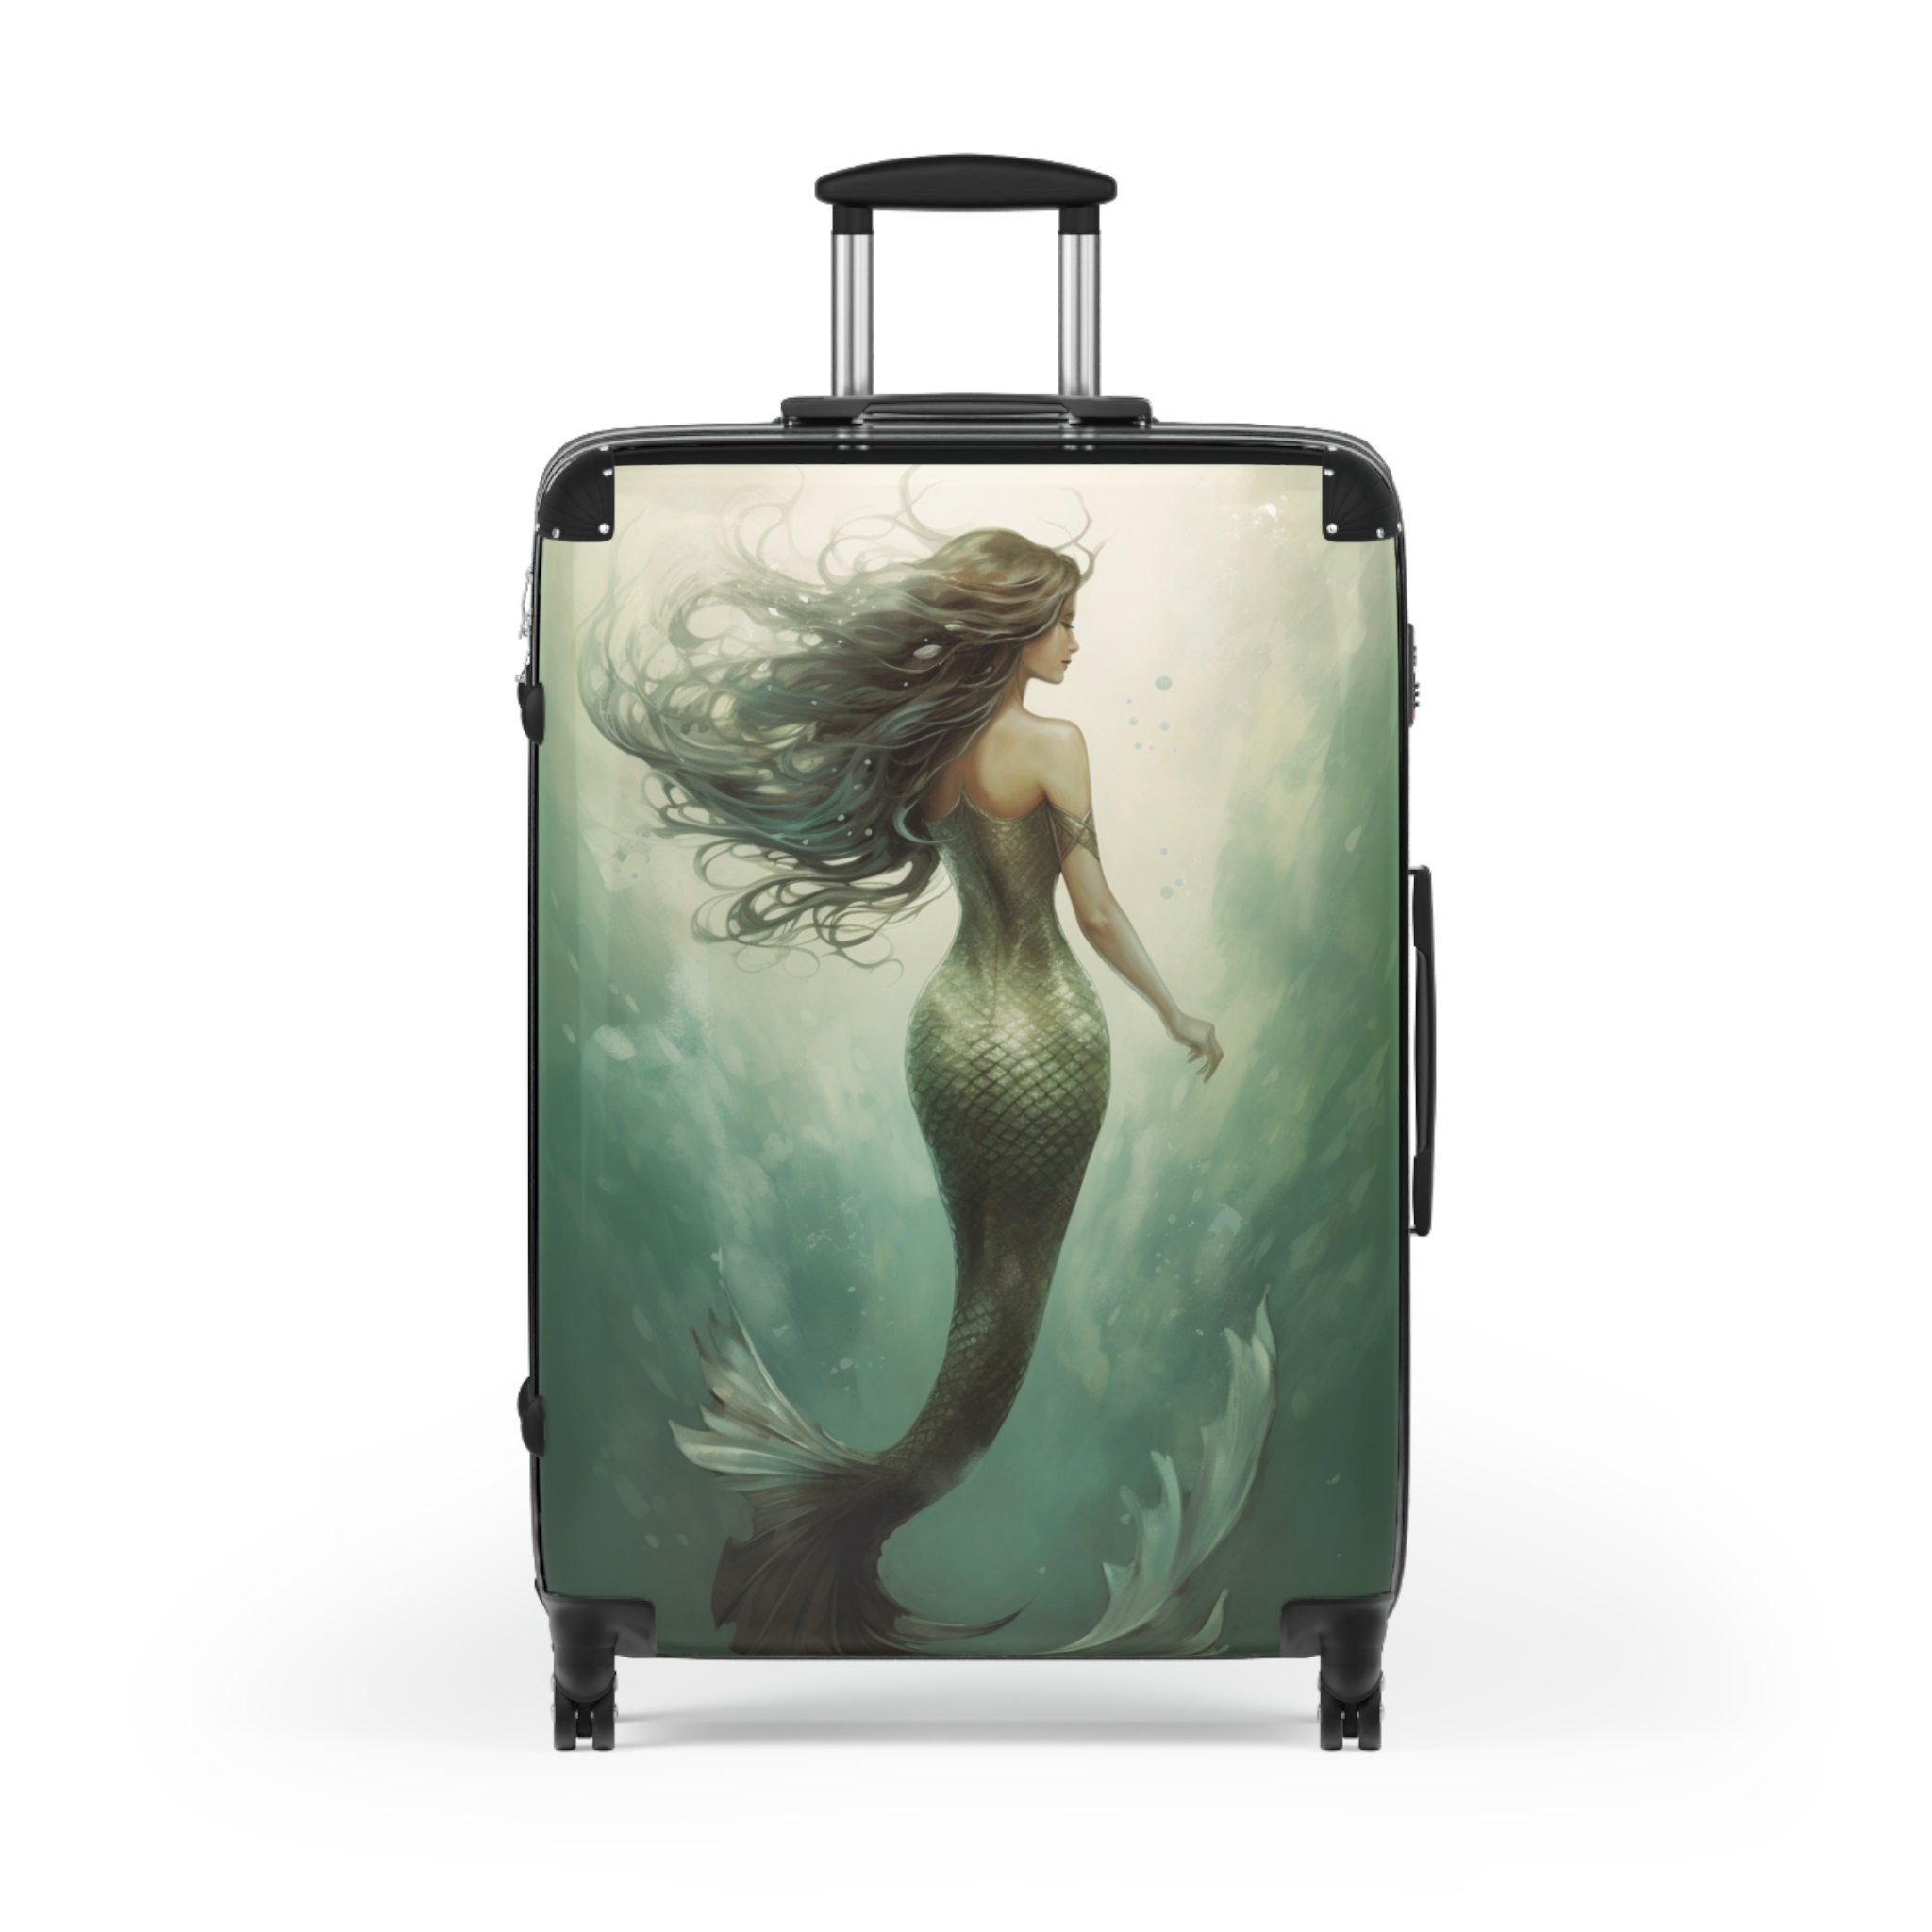 The Mermaid Suitcase, Vacation mermaid suitcase